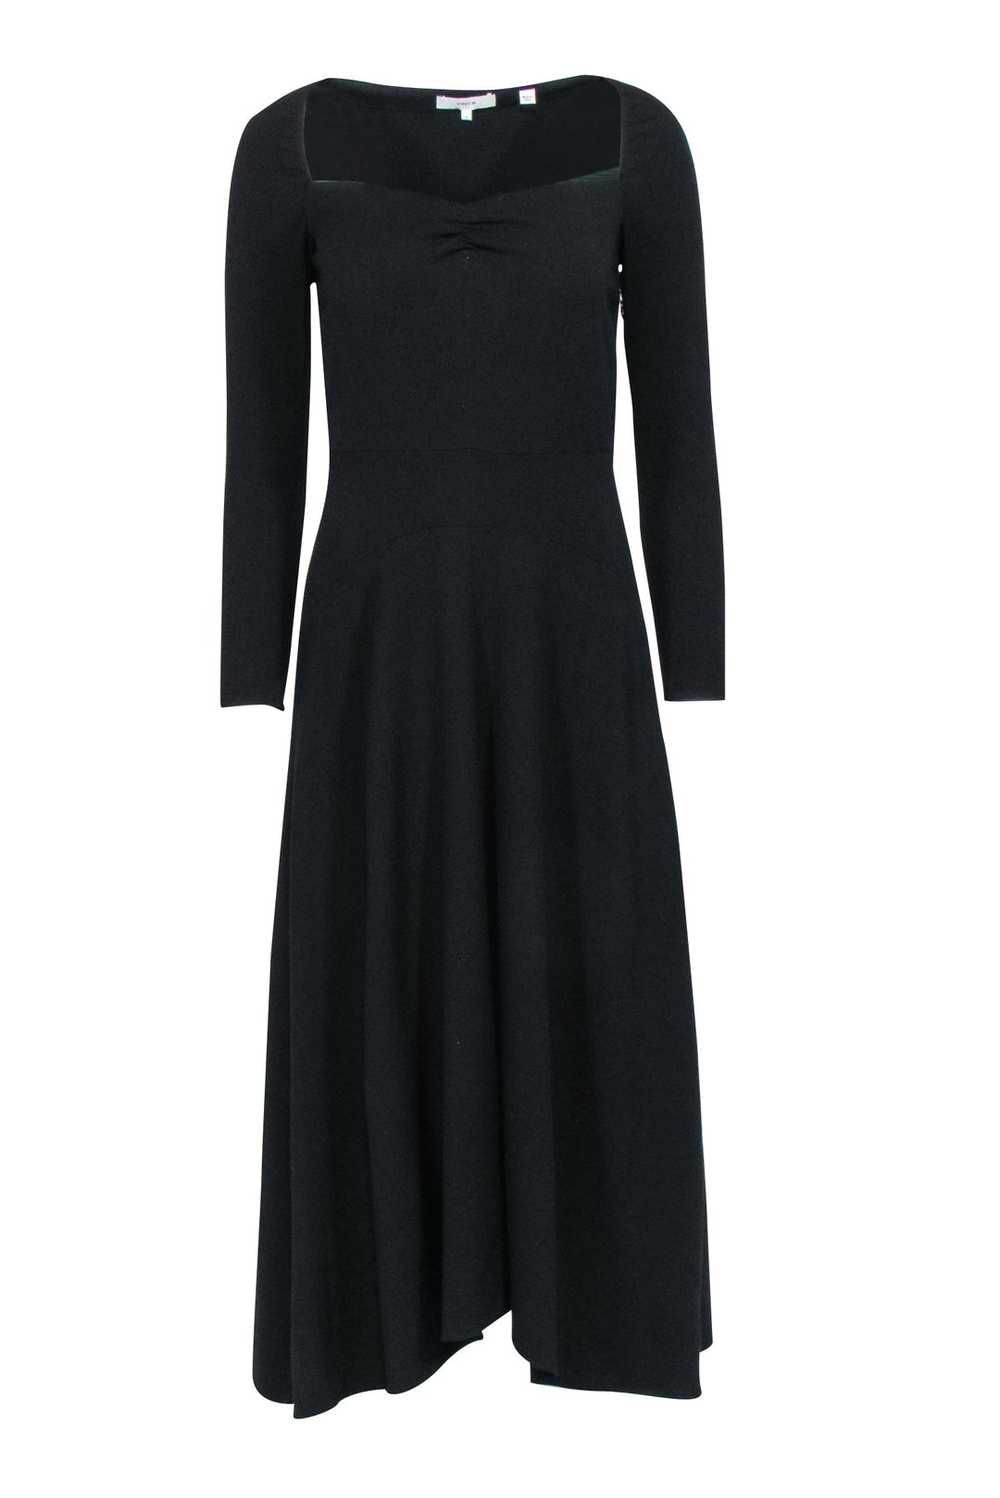 Vince - Black Long Sleeve Midi Dress Sz 0 - image 1